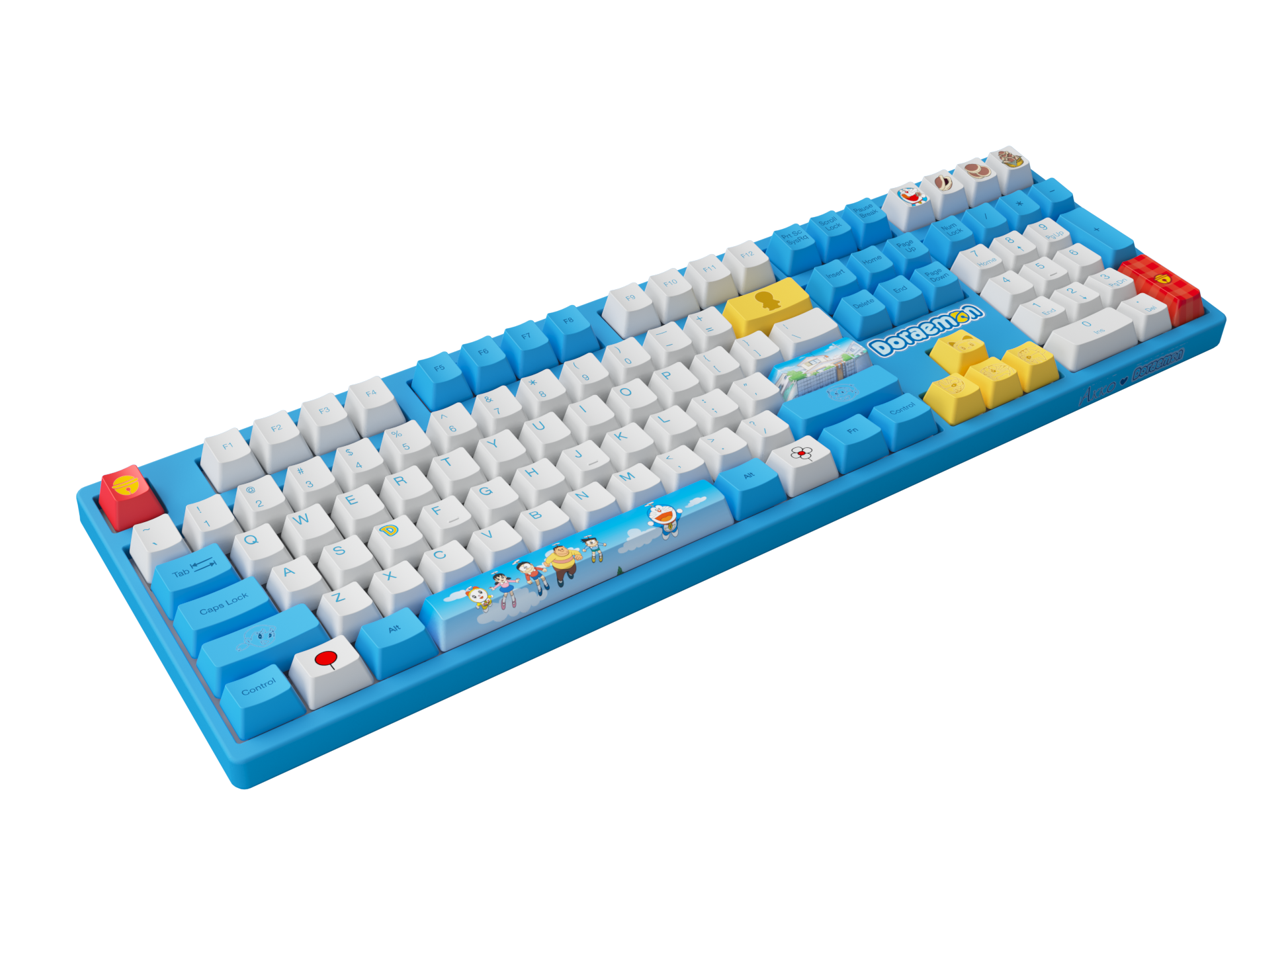 Akko Doraemon Wired Gaming Mechanical Keyboard Nkro Dye